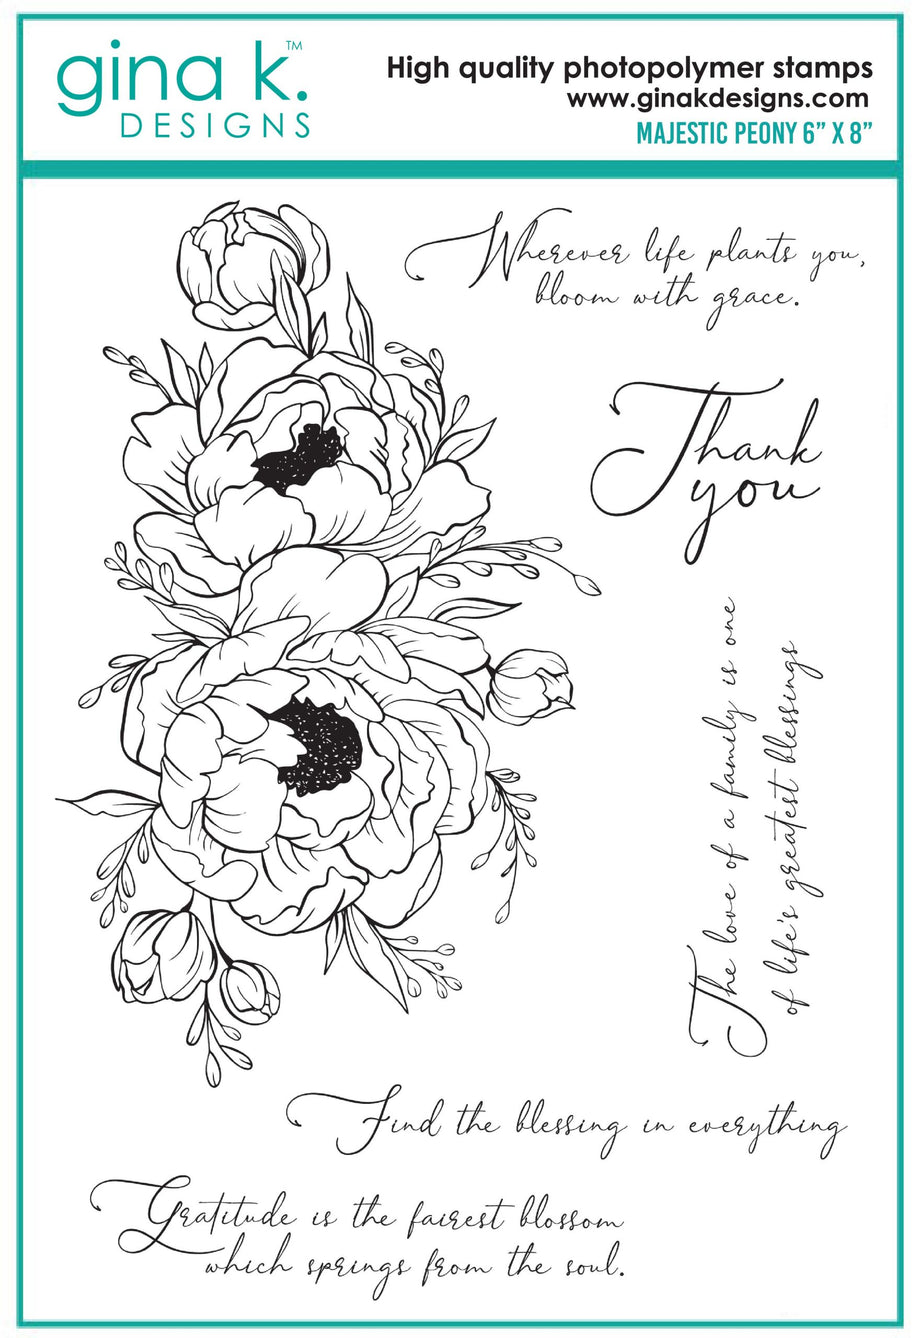 Gina K. Designs - Loving Letter handmade by stamp — Magnuson custom stamps